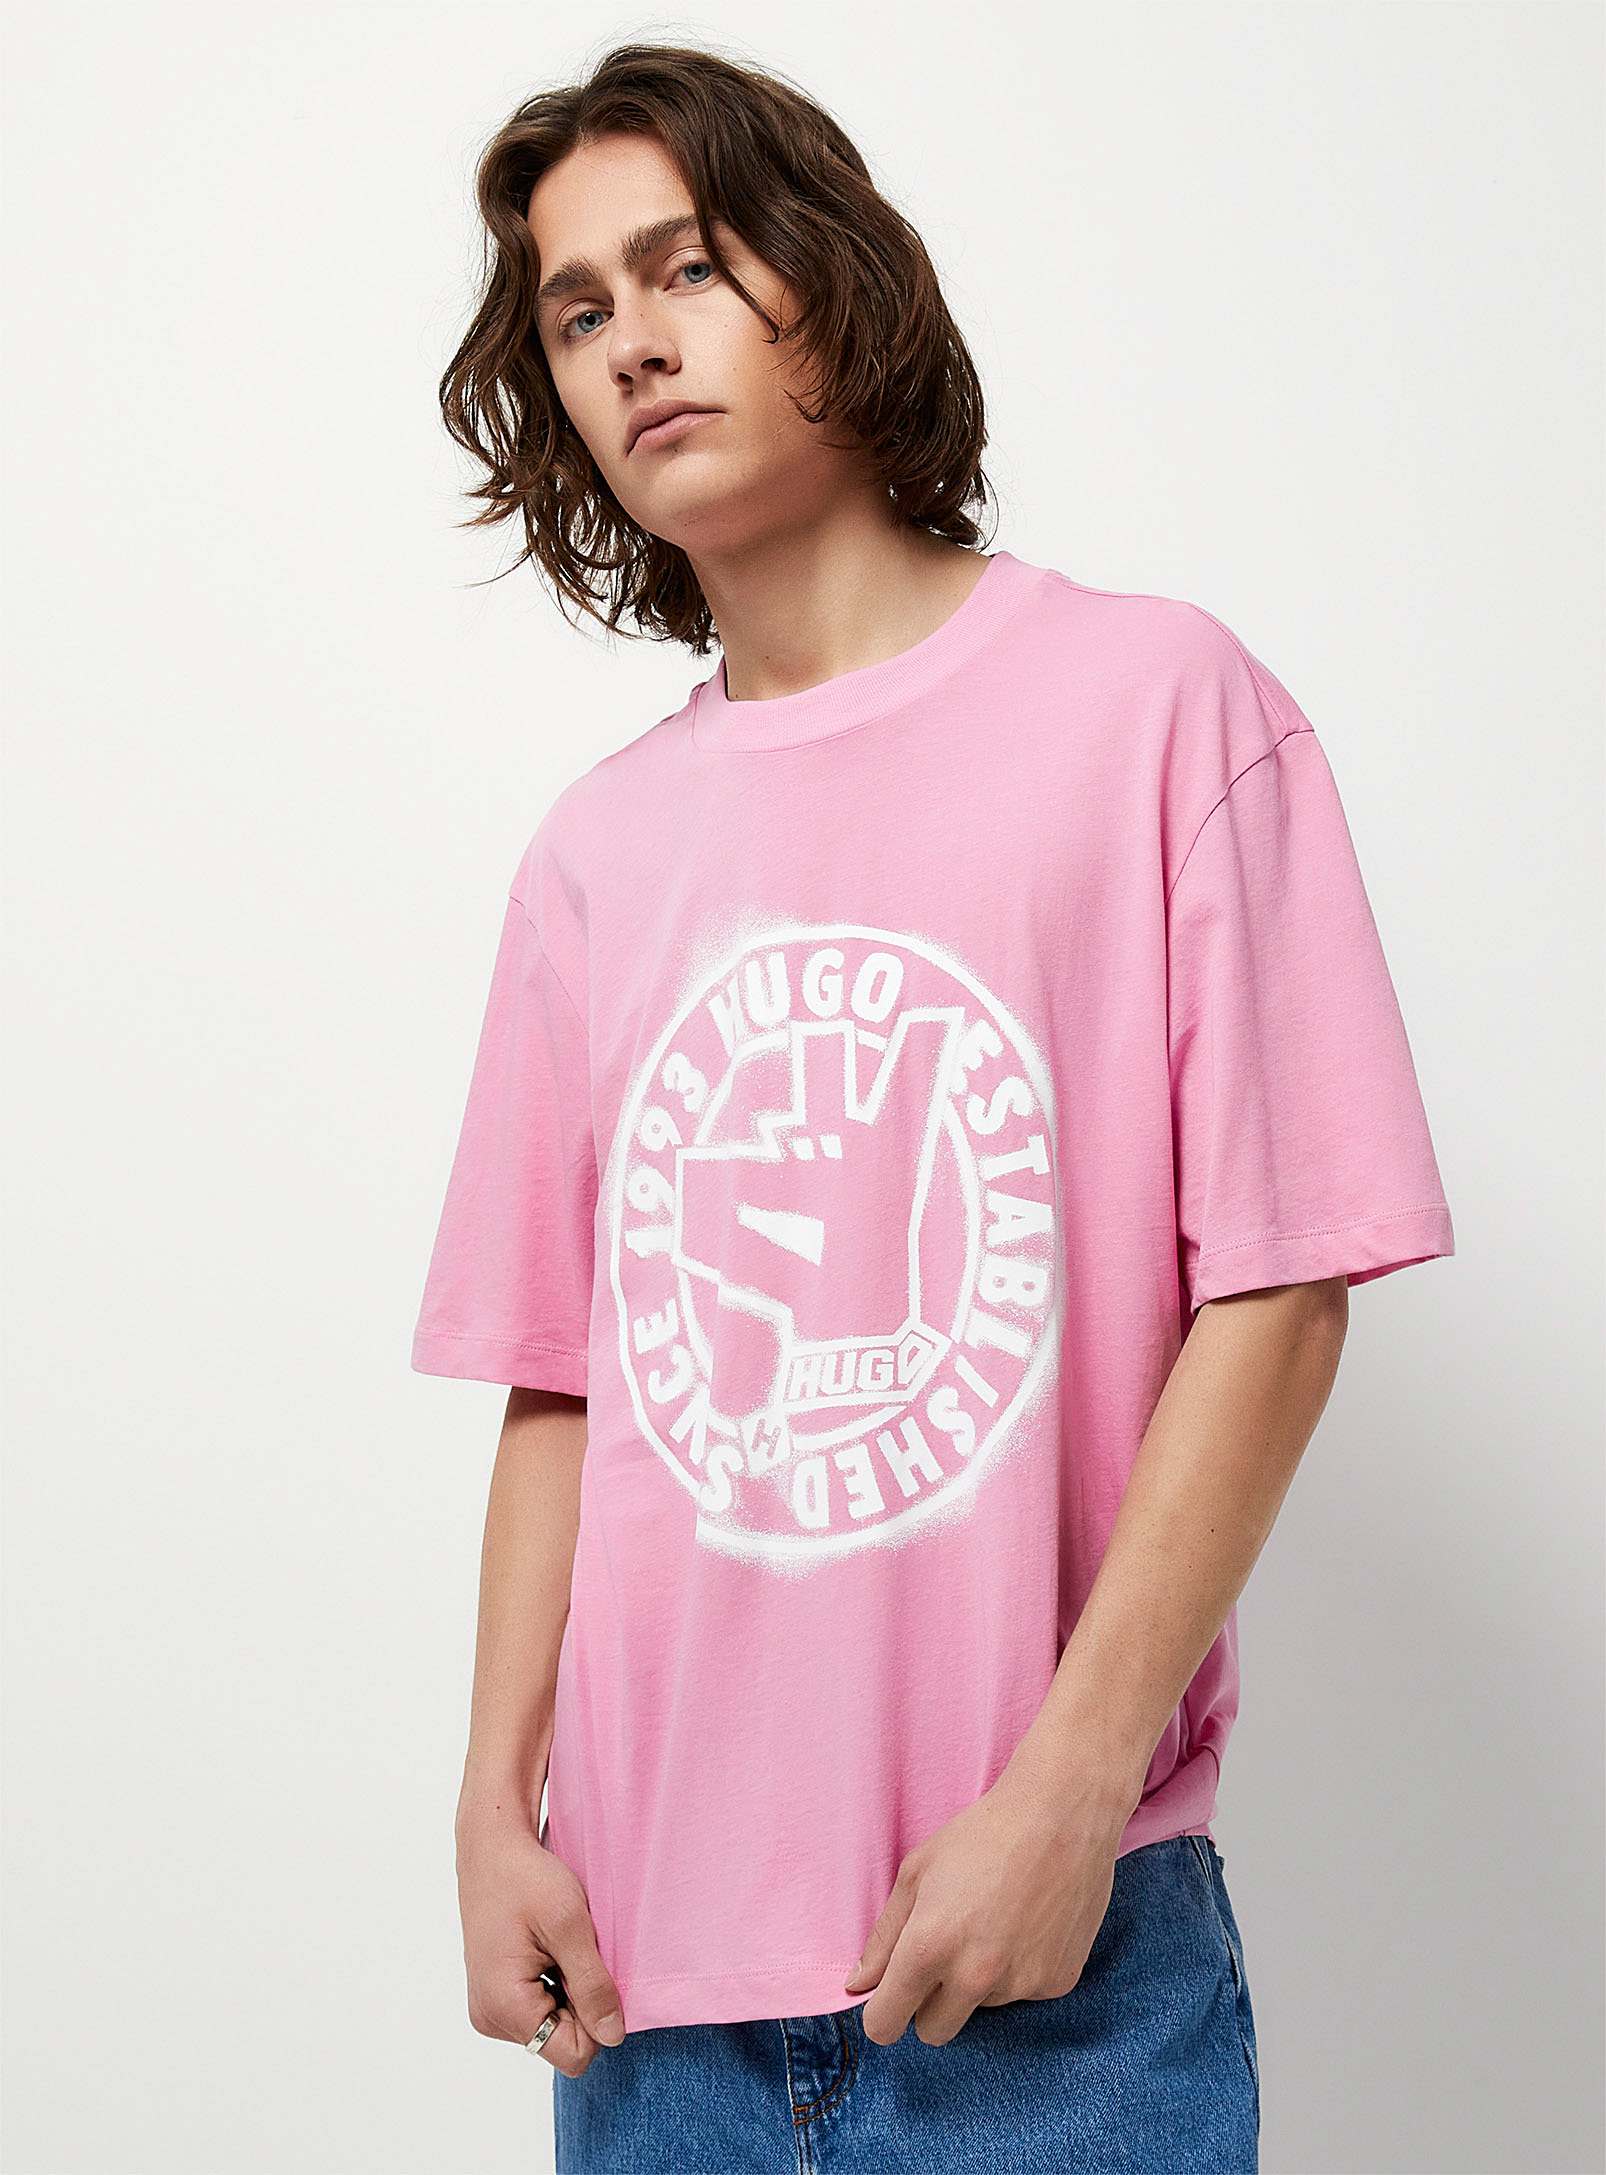 HUGO - Men's Pink stencil logo T-shirt